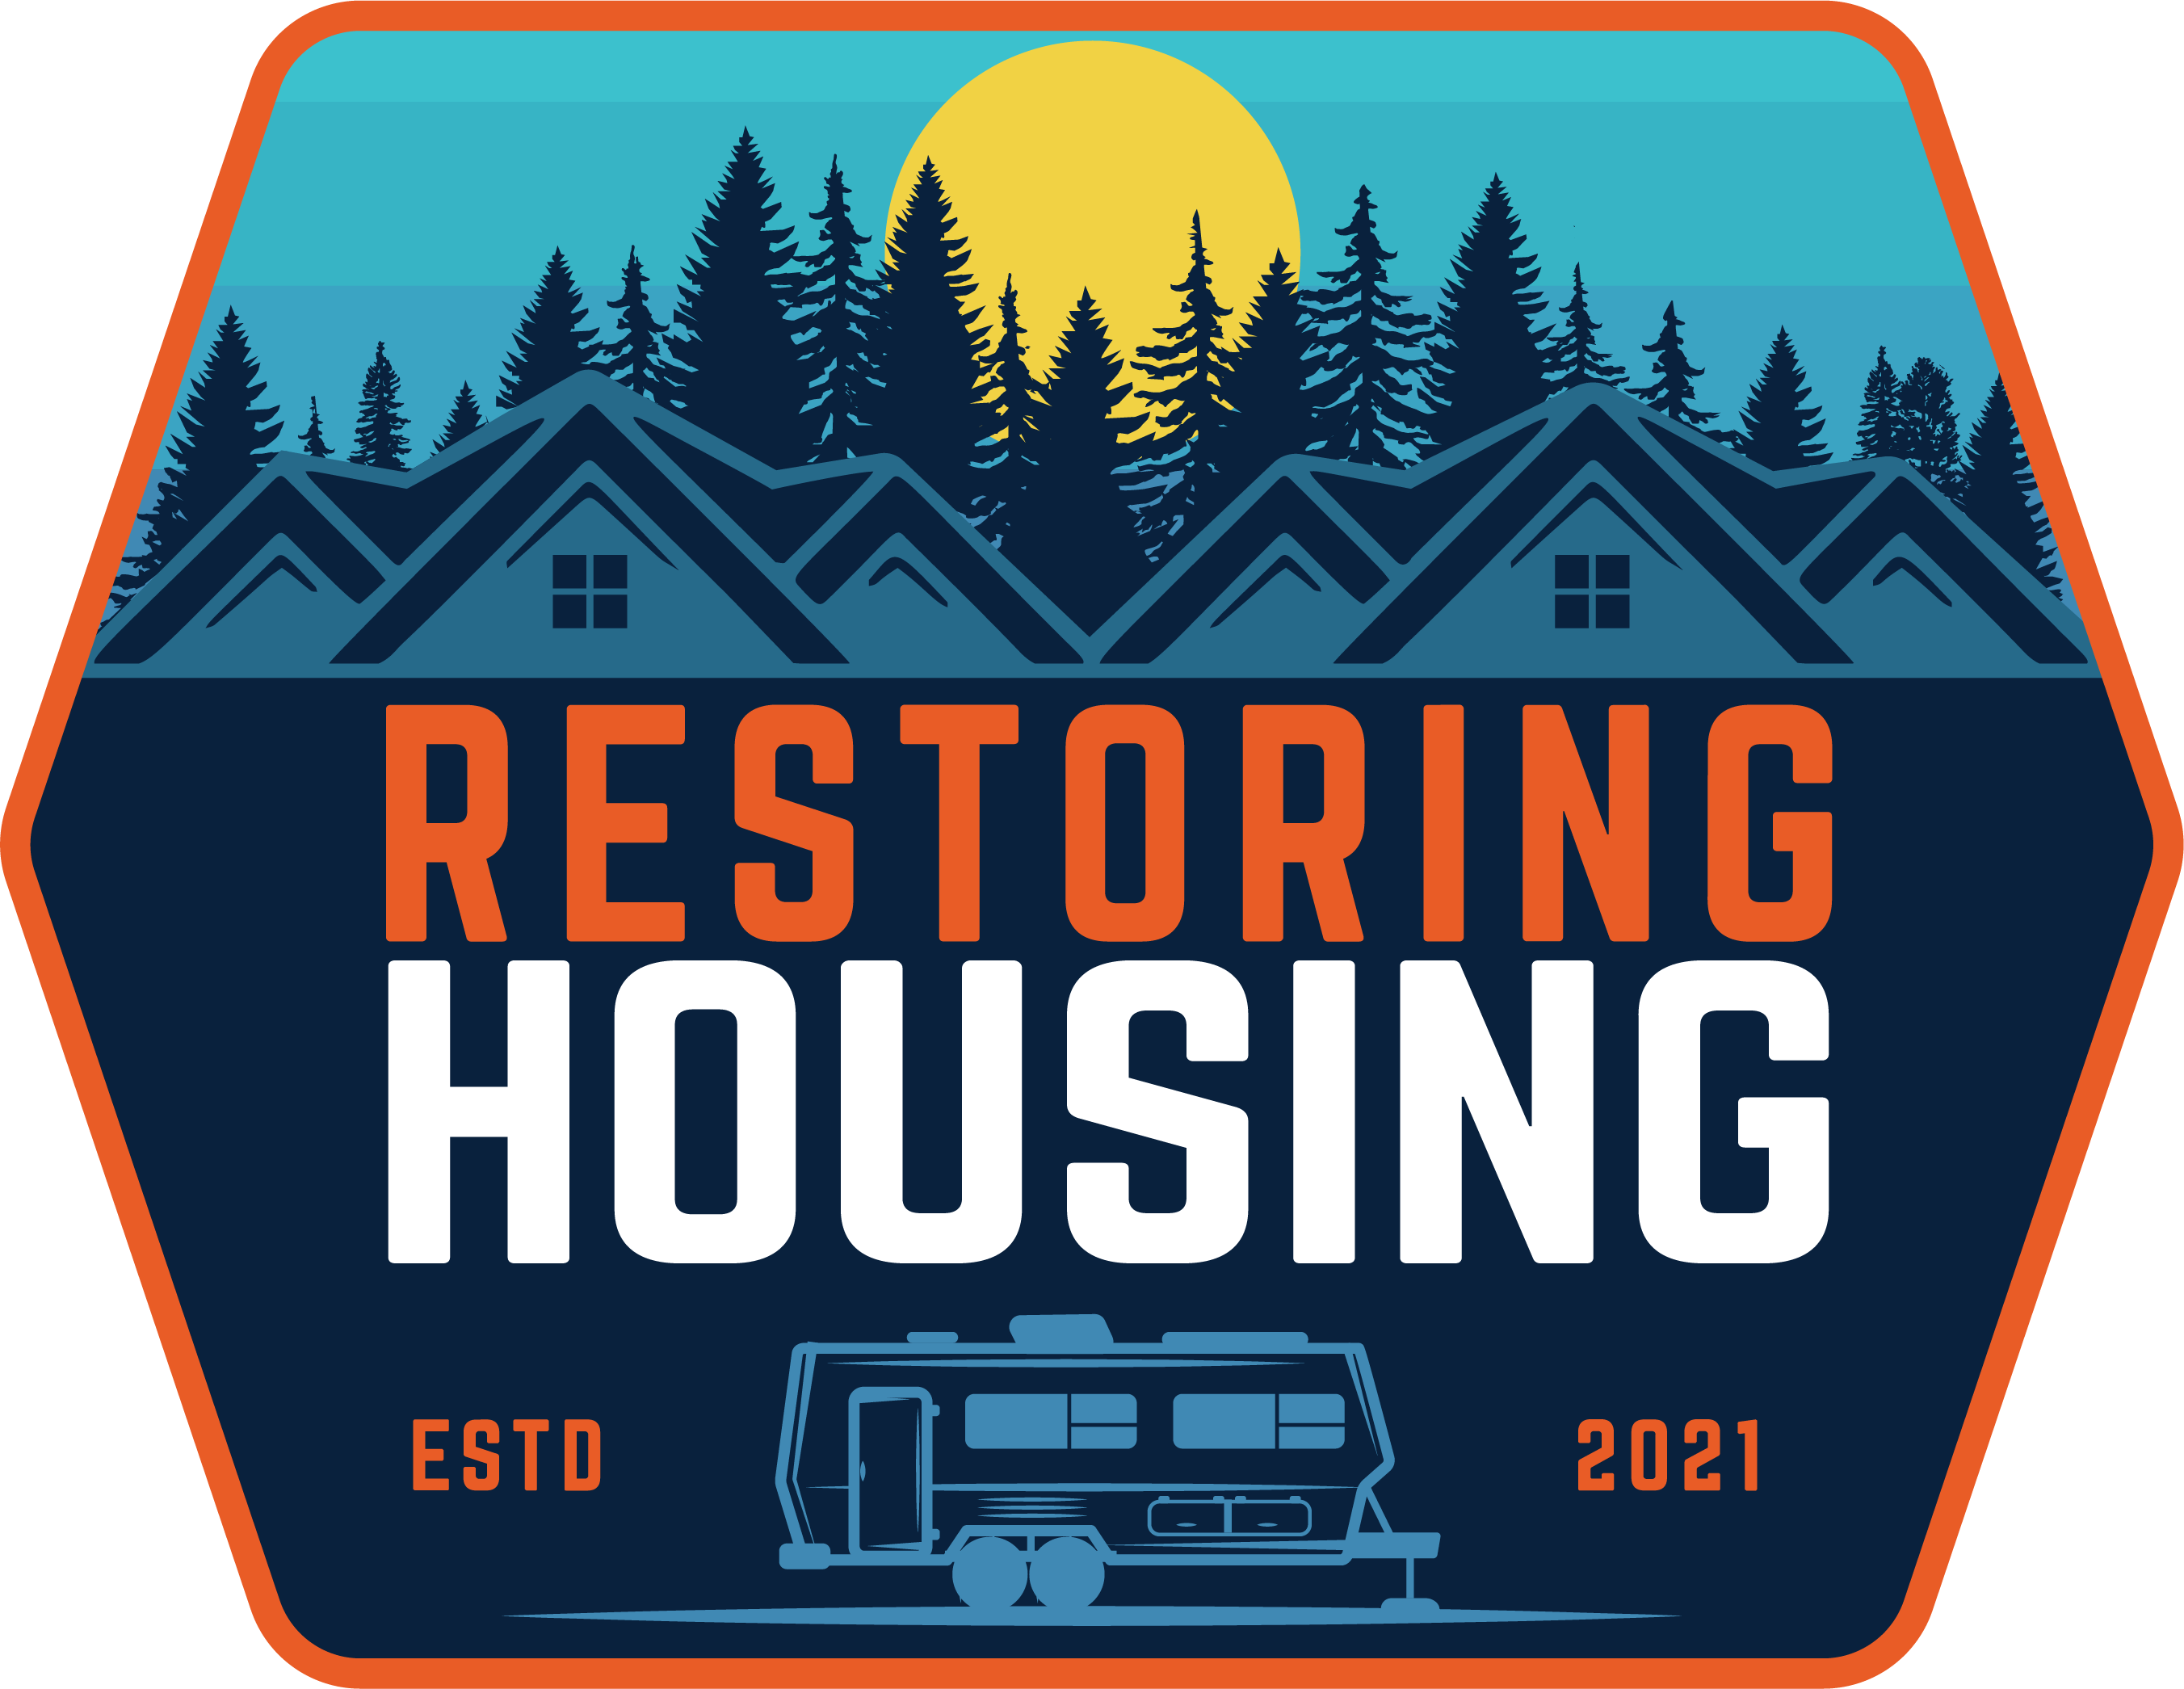 Restoring Housing - Temporary Housing Solutions